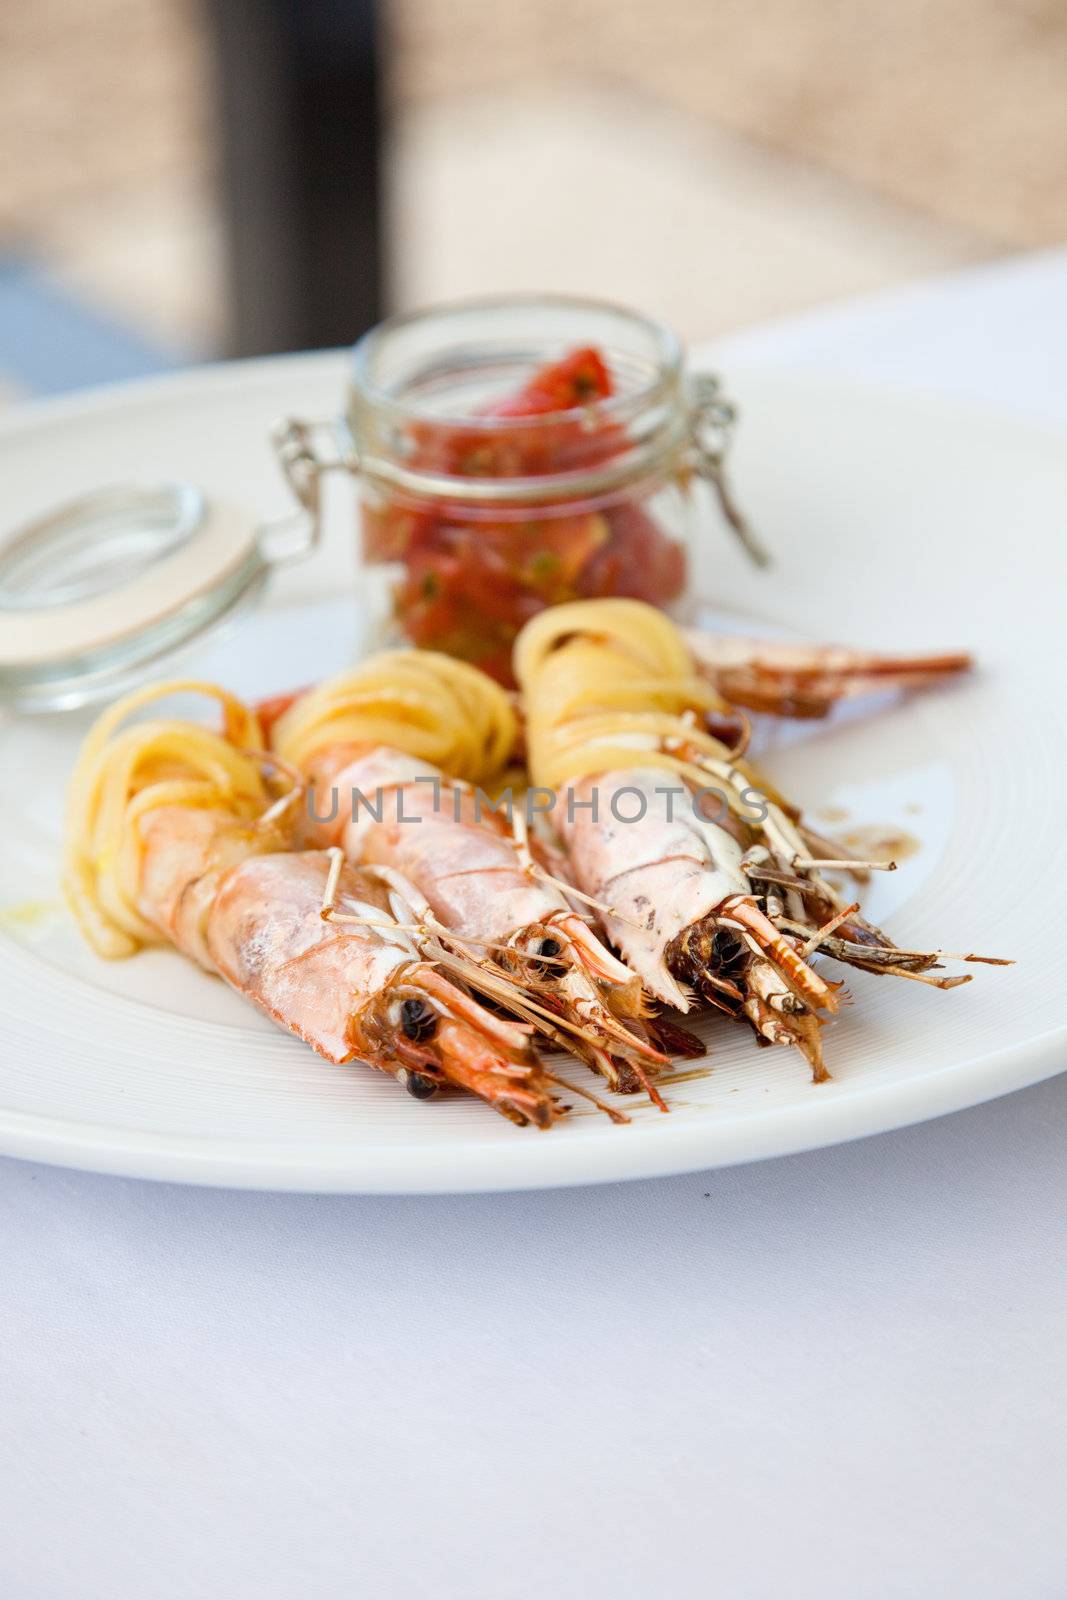 Plate of prawns by Fotosmurf